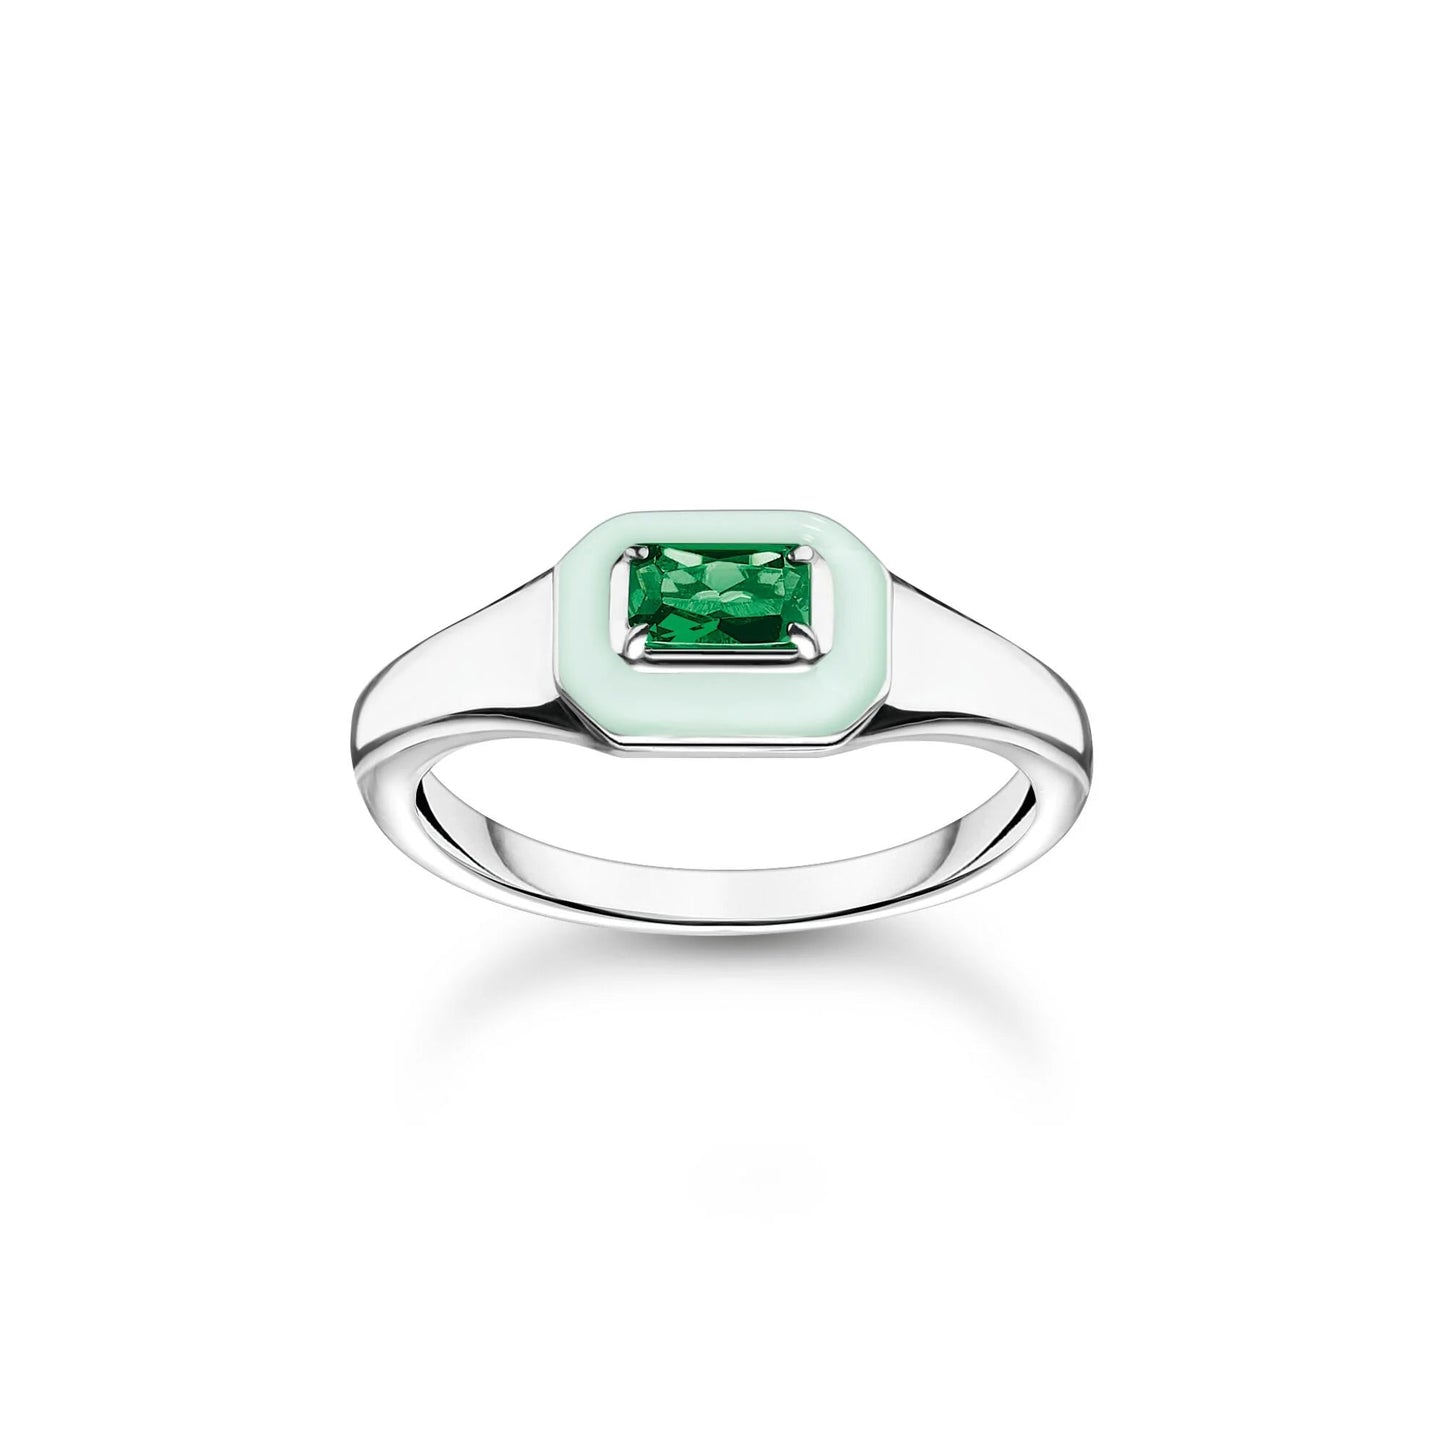 THOMAS SABO Octagon Green Stone Ring